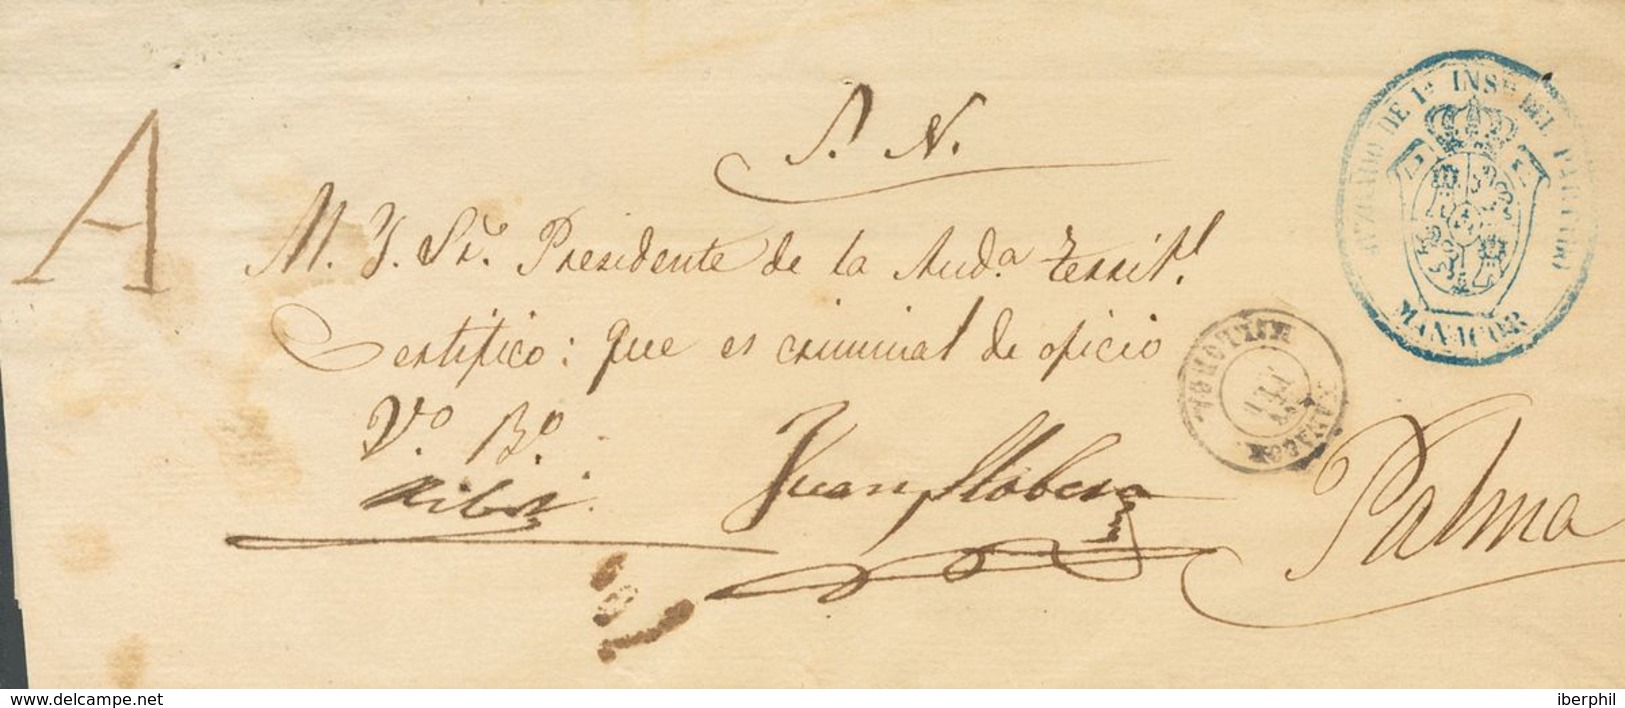 Prefilatelia, Baleares. Sobre. 1872. Plica Judicial De MANACOR A PALMA DE MALLORCA. Marca "A", De Abono Manuscrita Y Fec - ...-1850 Prephilately